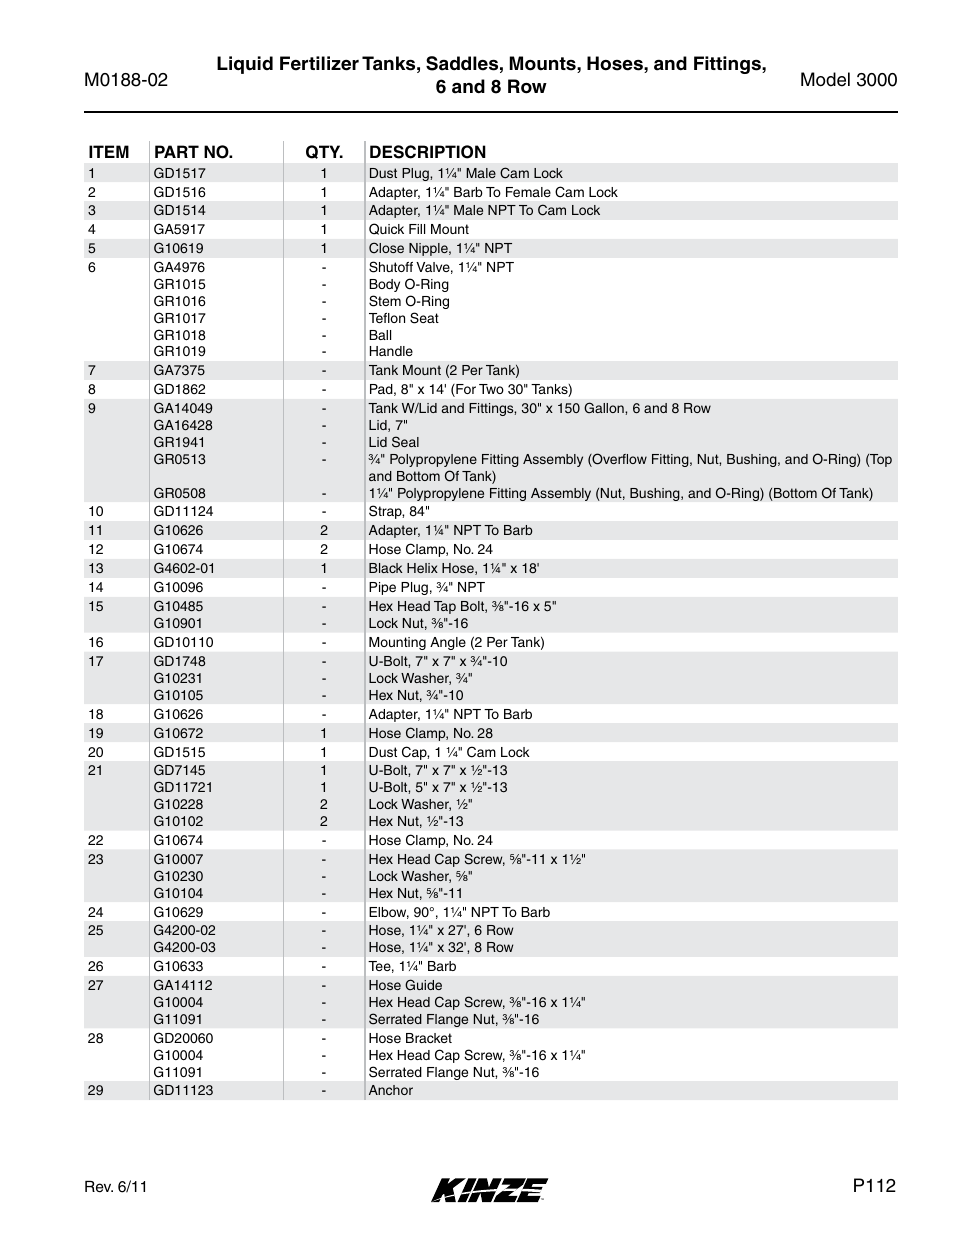 P112 | Kinze 3000 Rigid Frame Planter Rev. 5/14 User Manual | Page 115 / 154